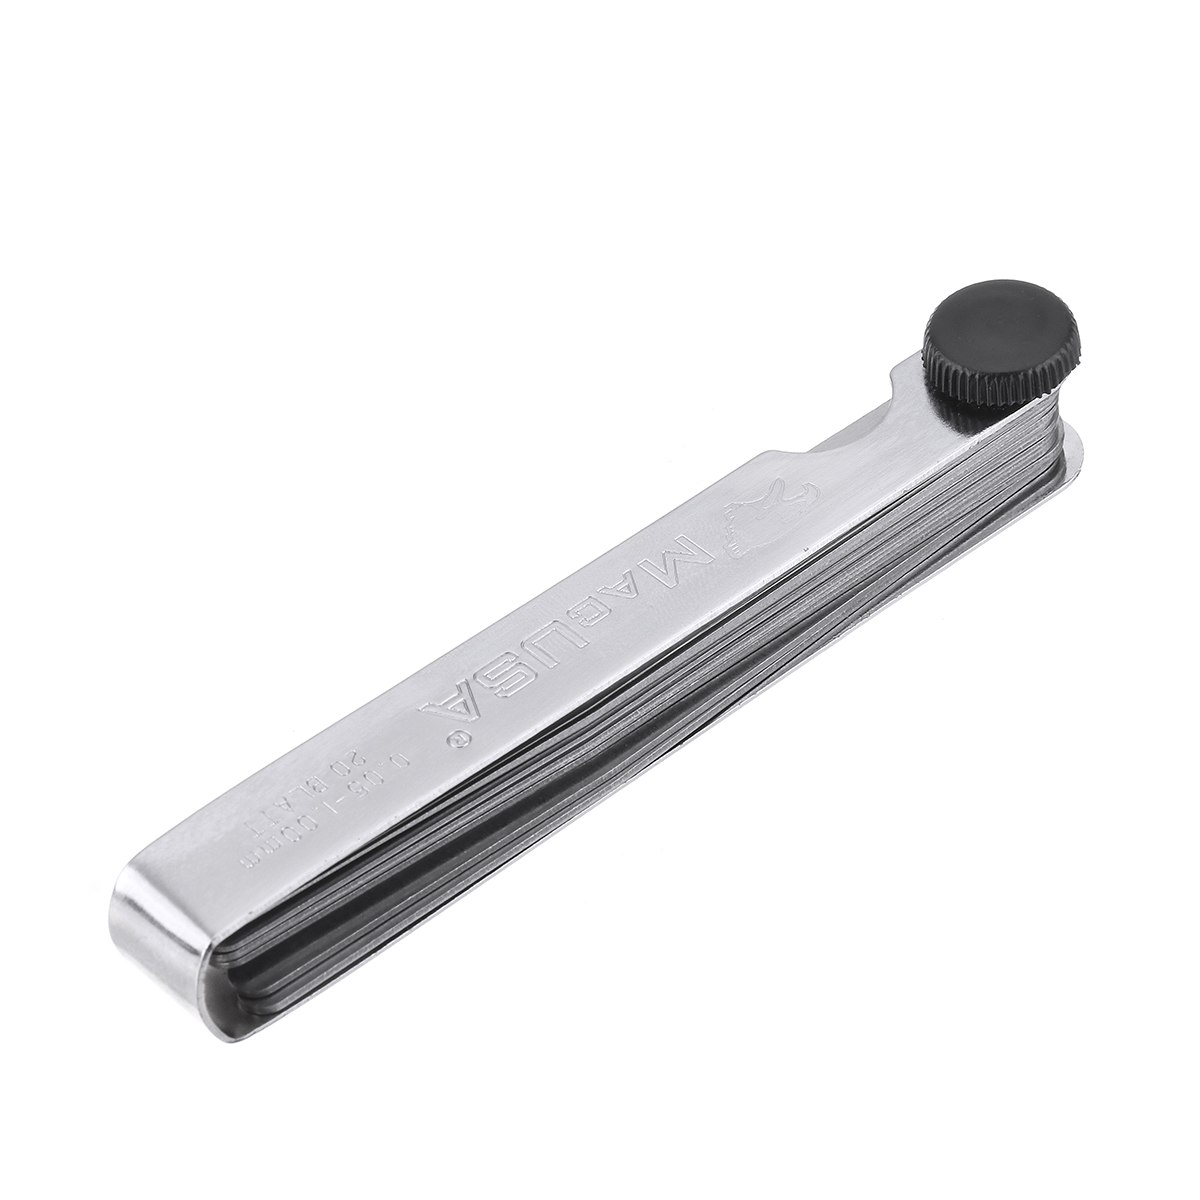 Drillpro-20-Blade-Feeler-Metric-Gauge-005-to-10mm-Thickness-Spark-Plug-Measure-Gap-Tool-1465492-7